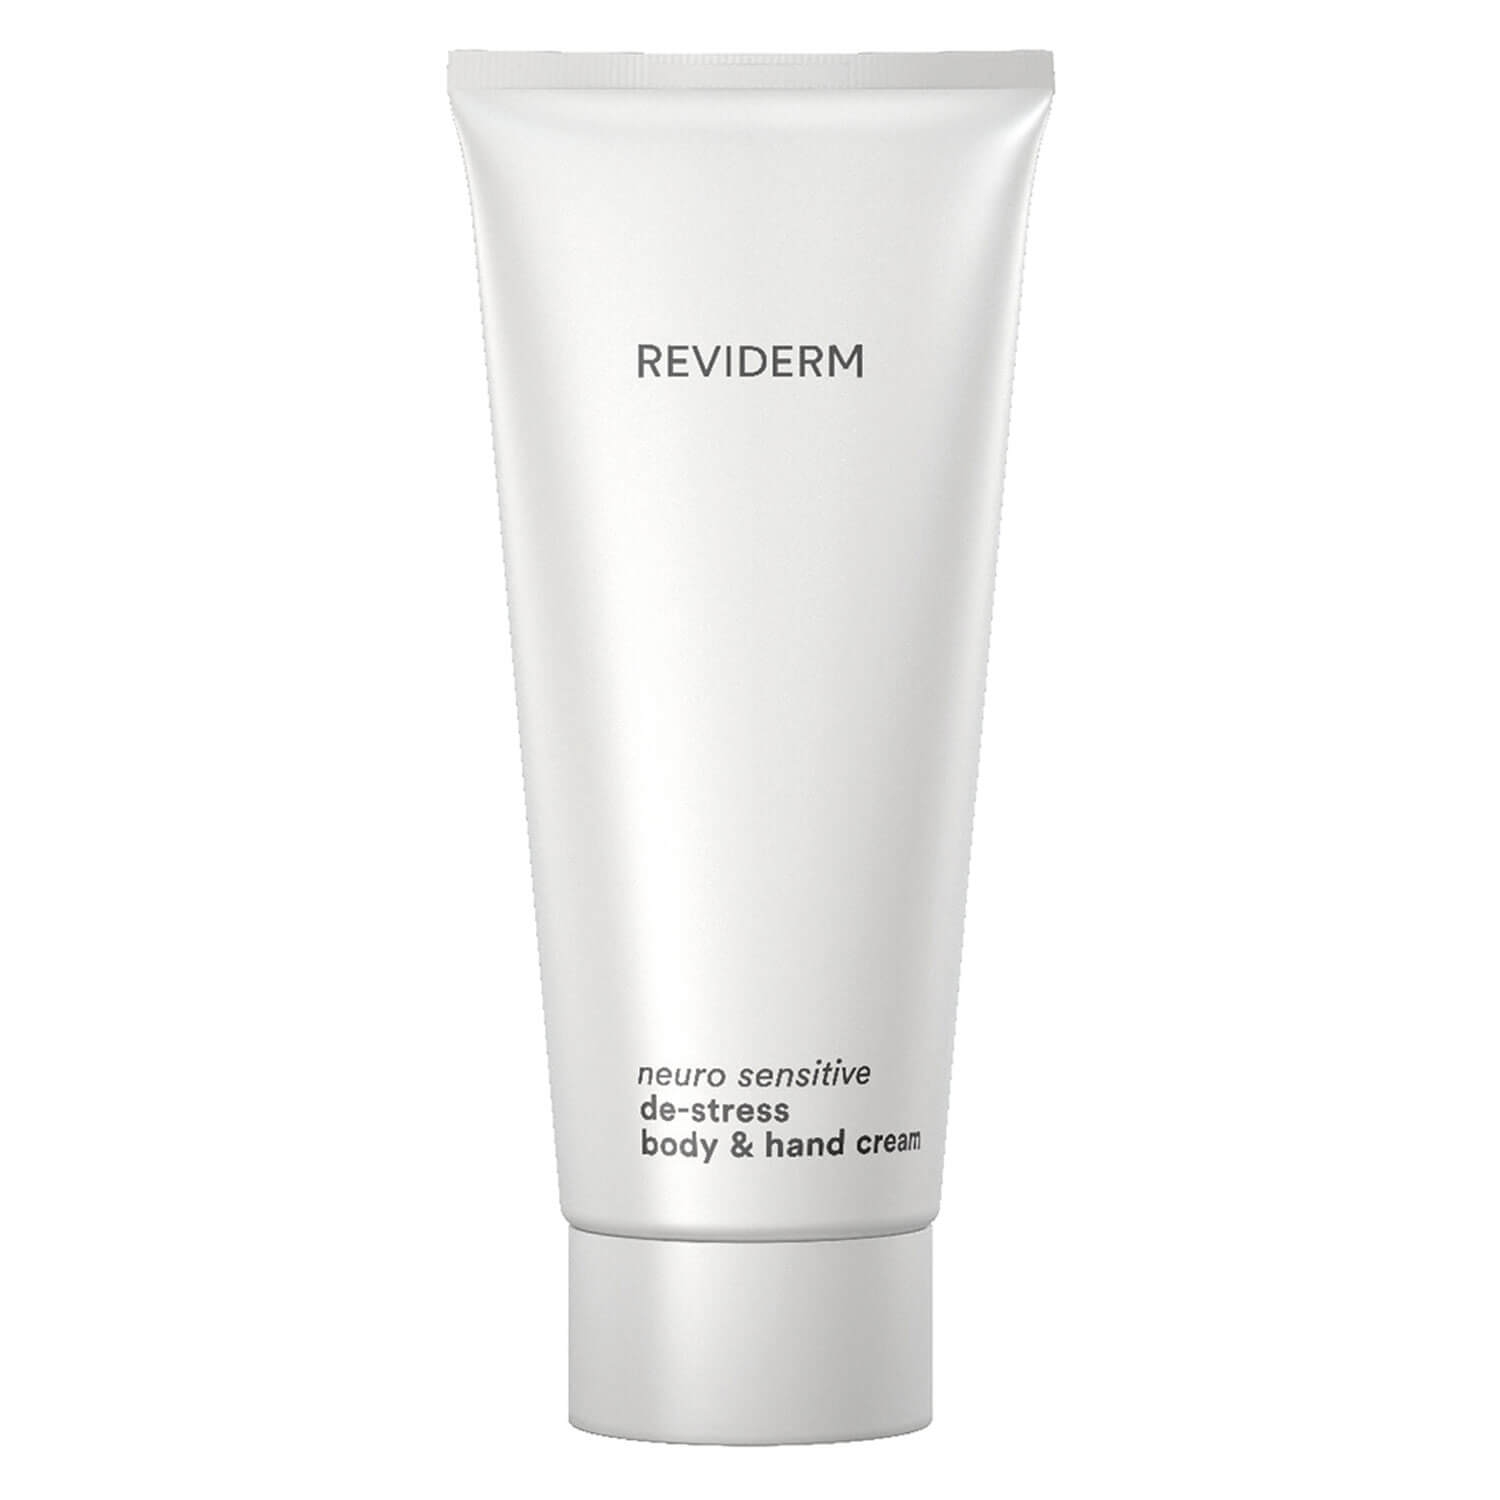 Image du produit de Reviderm Neuro Sensitive - de-stress body & hand cream